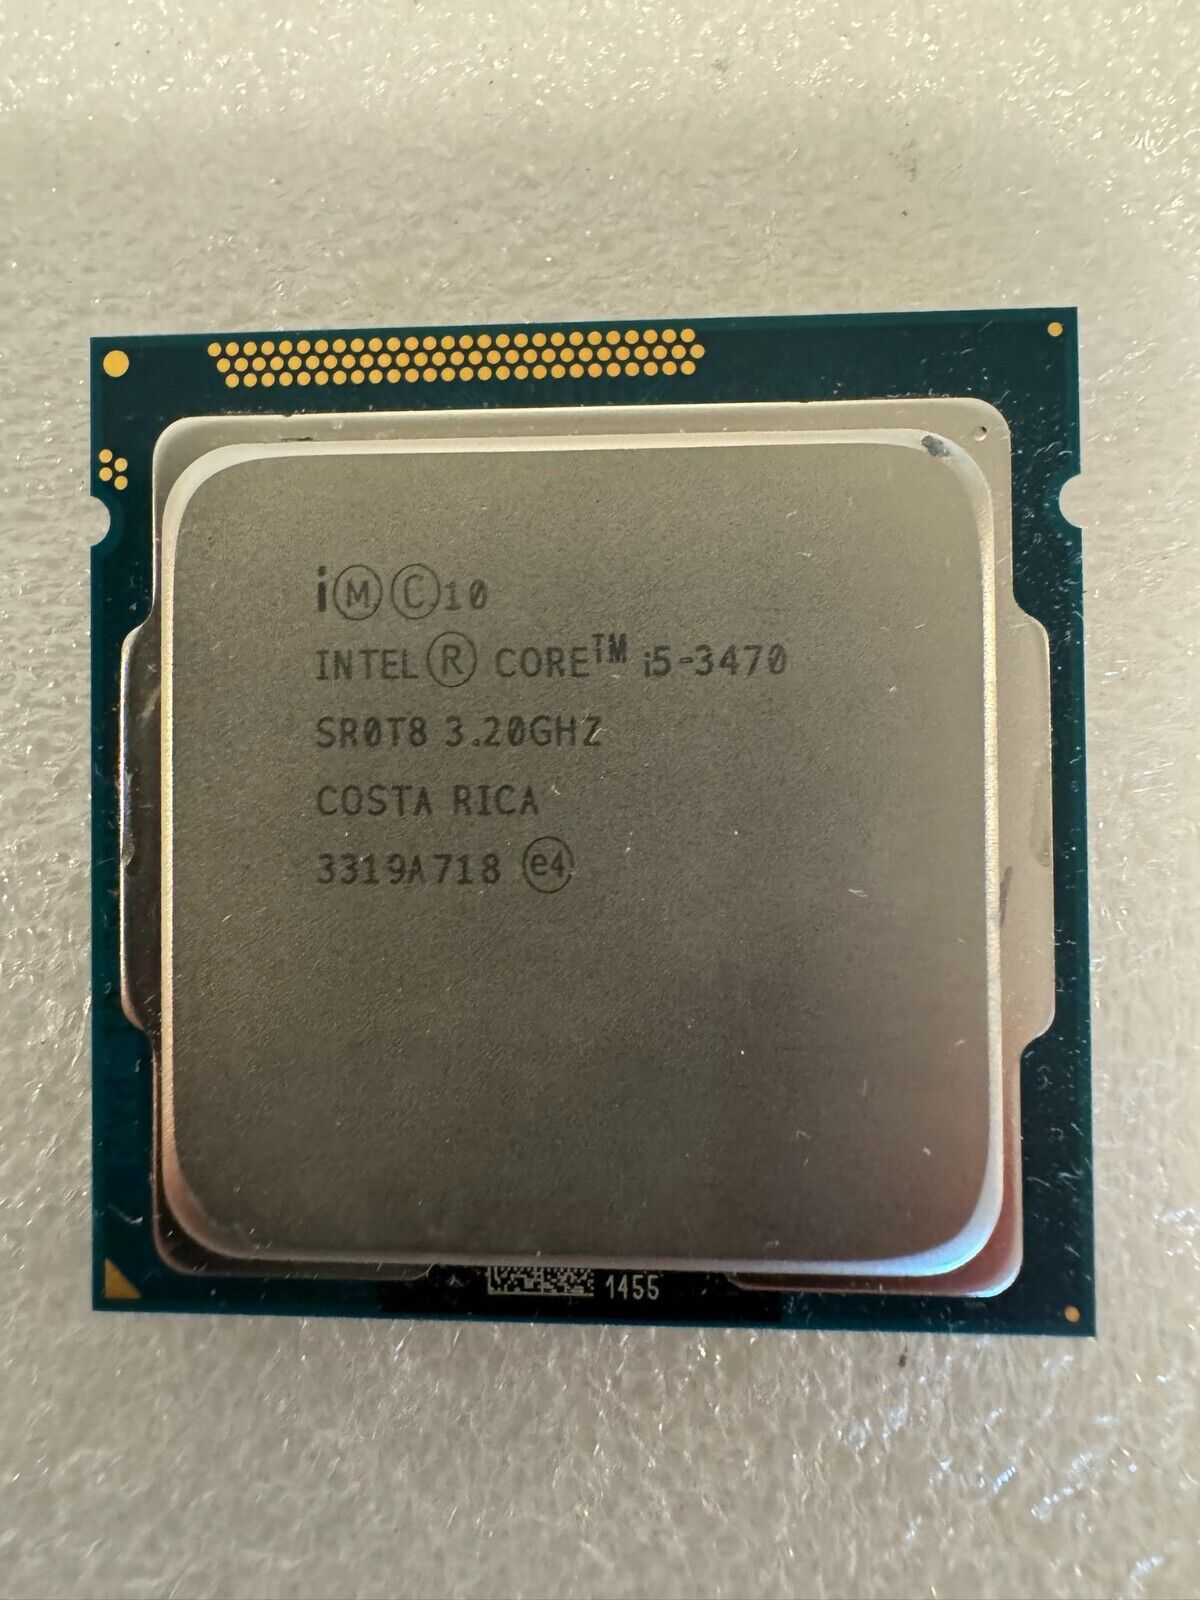 Intel Quad Core  i5-3470 SR0T8  3.2GHz 6M Cache  LGA1155 CPU Processor 3rd gen